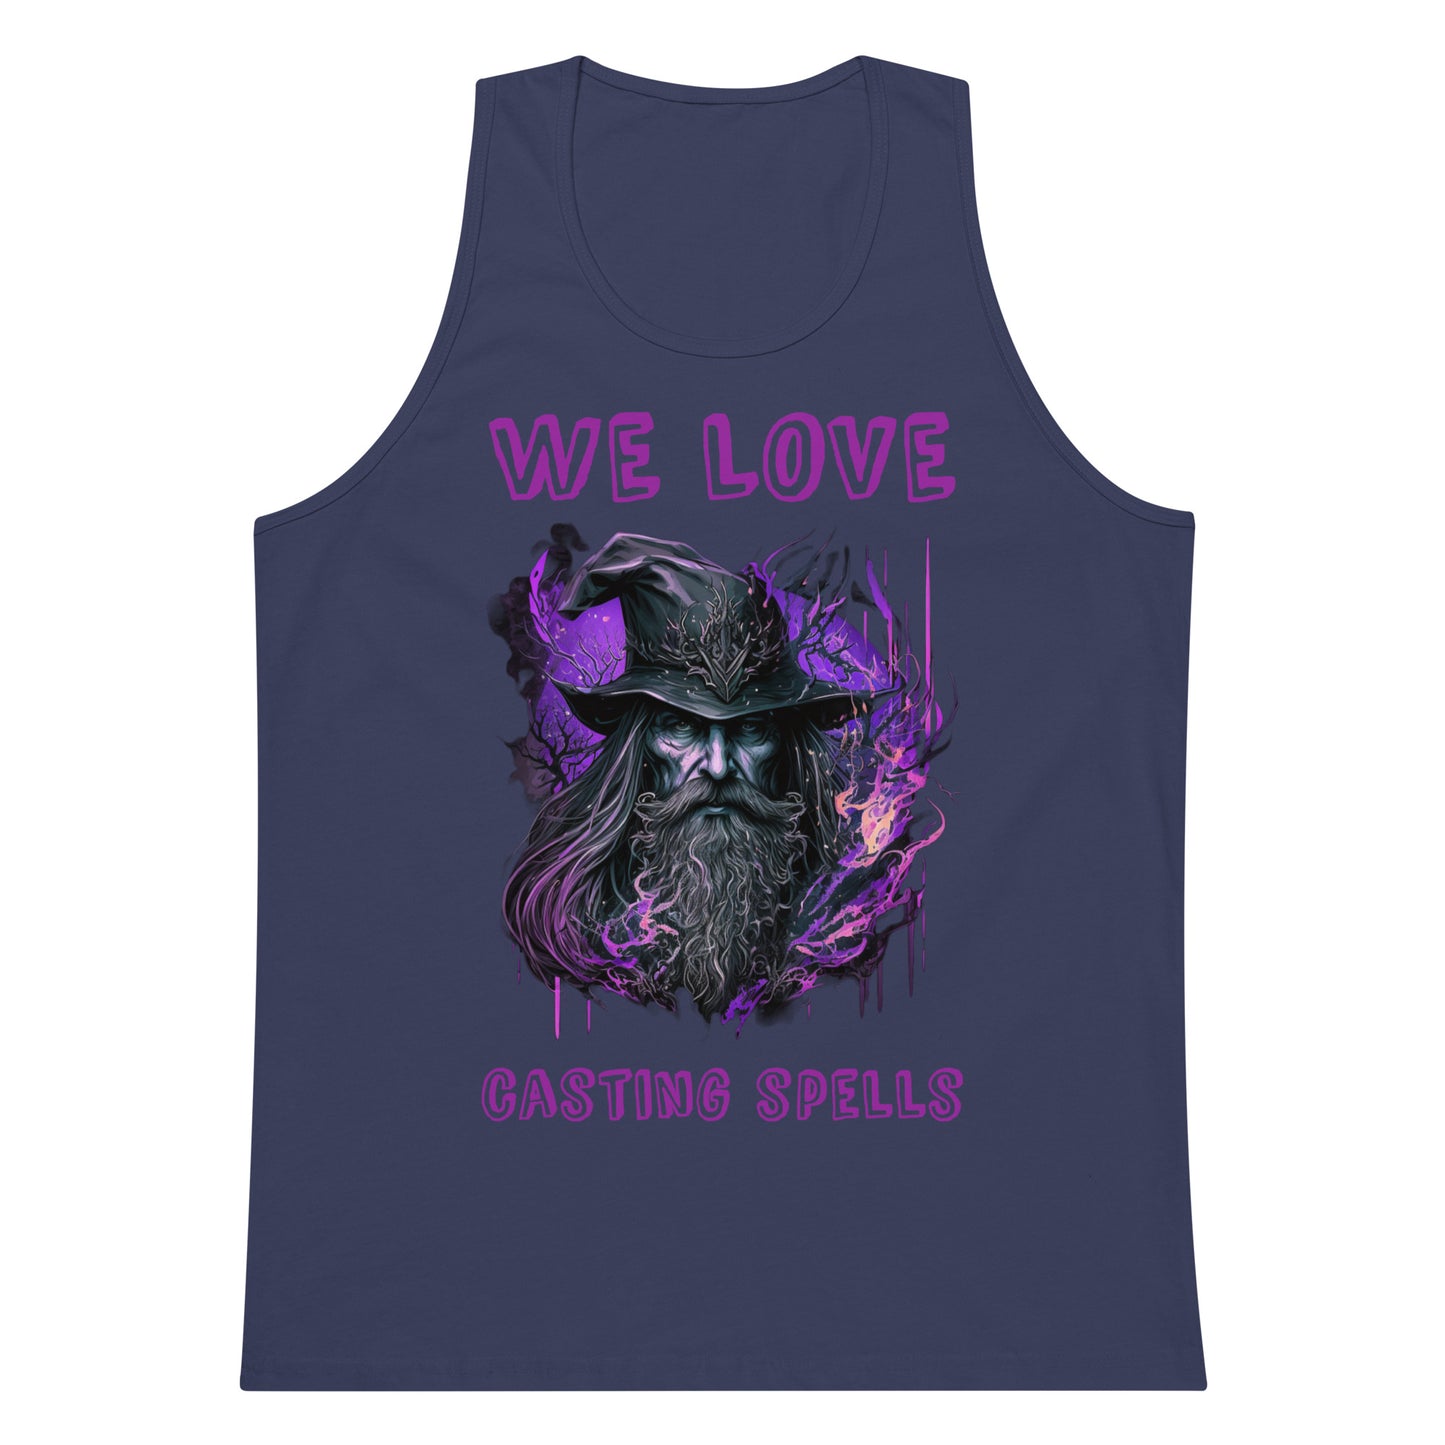 We love casting spells (tank top)